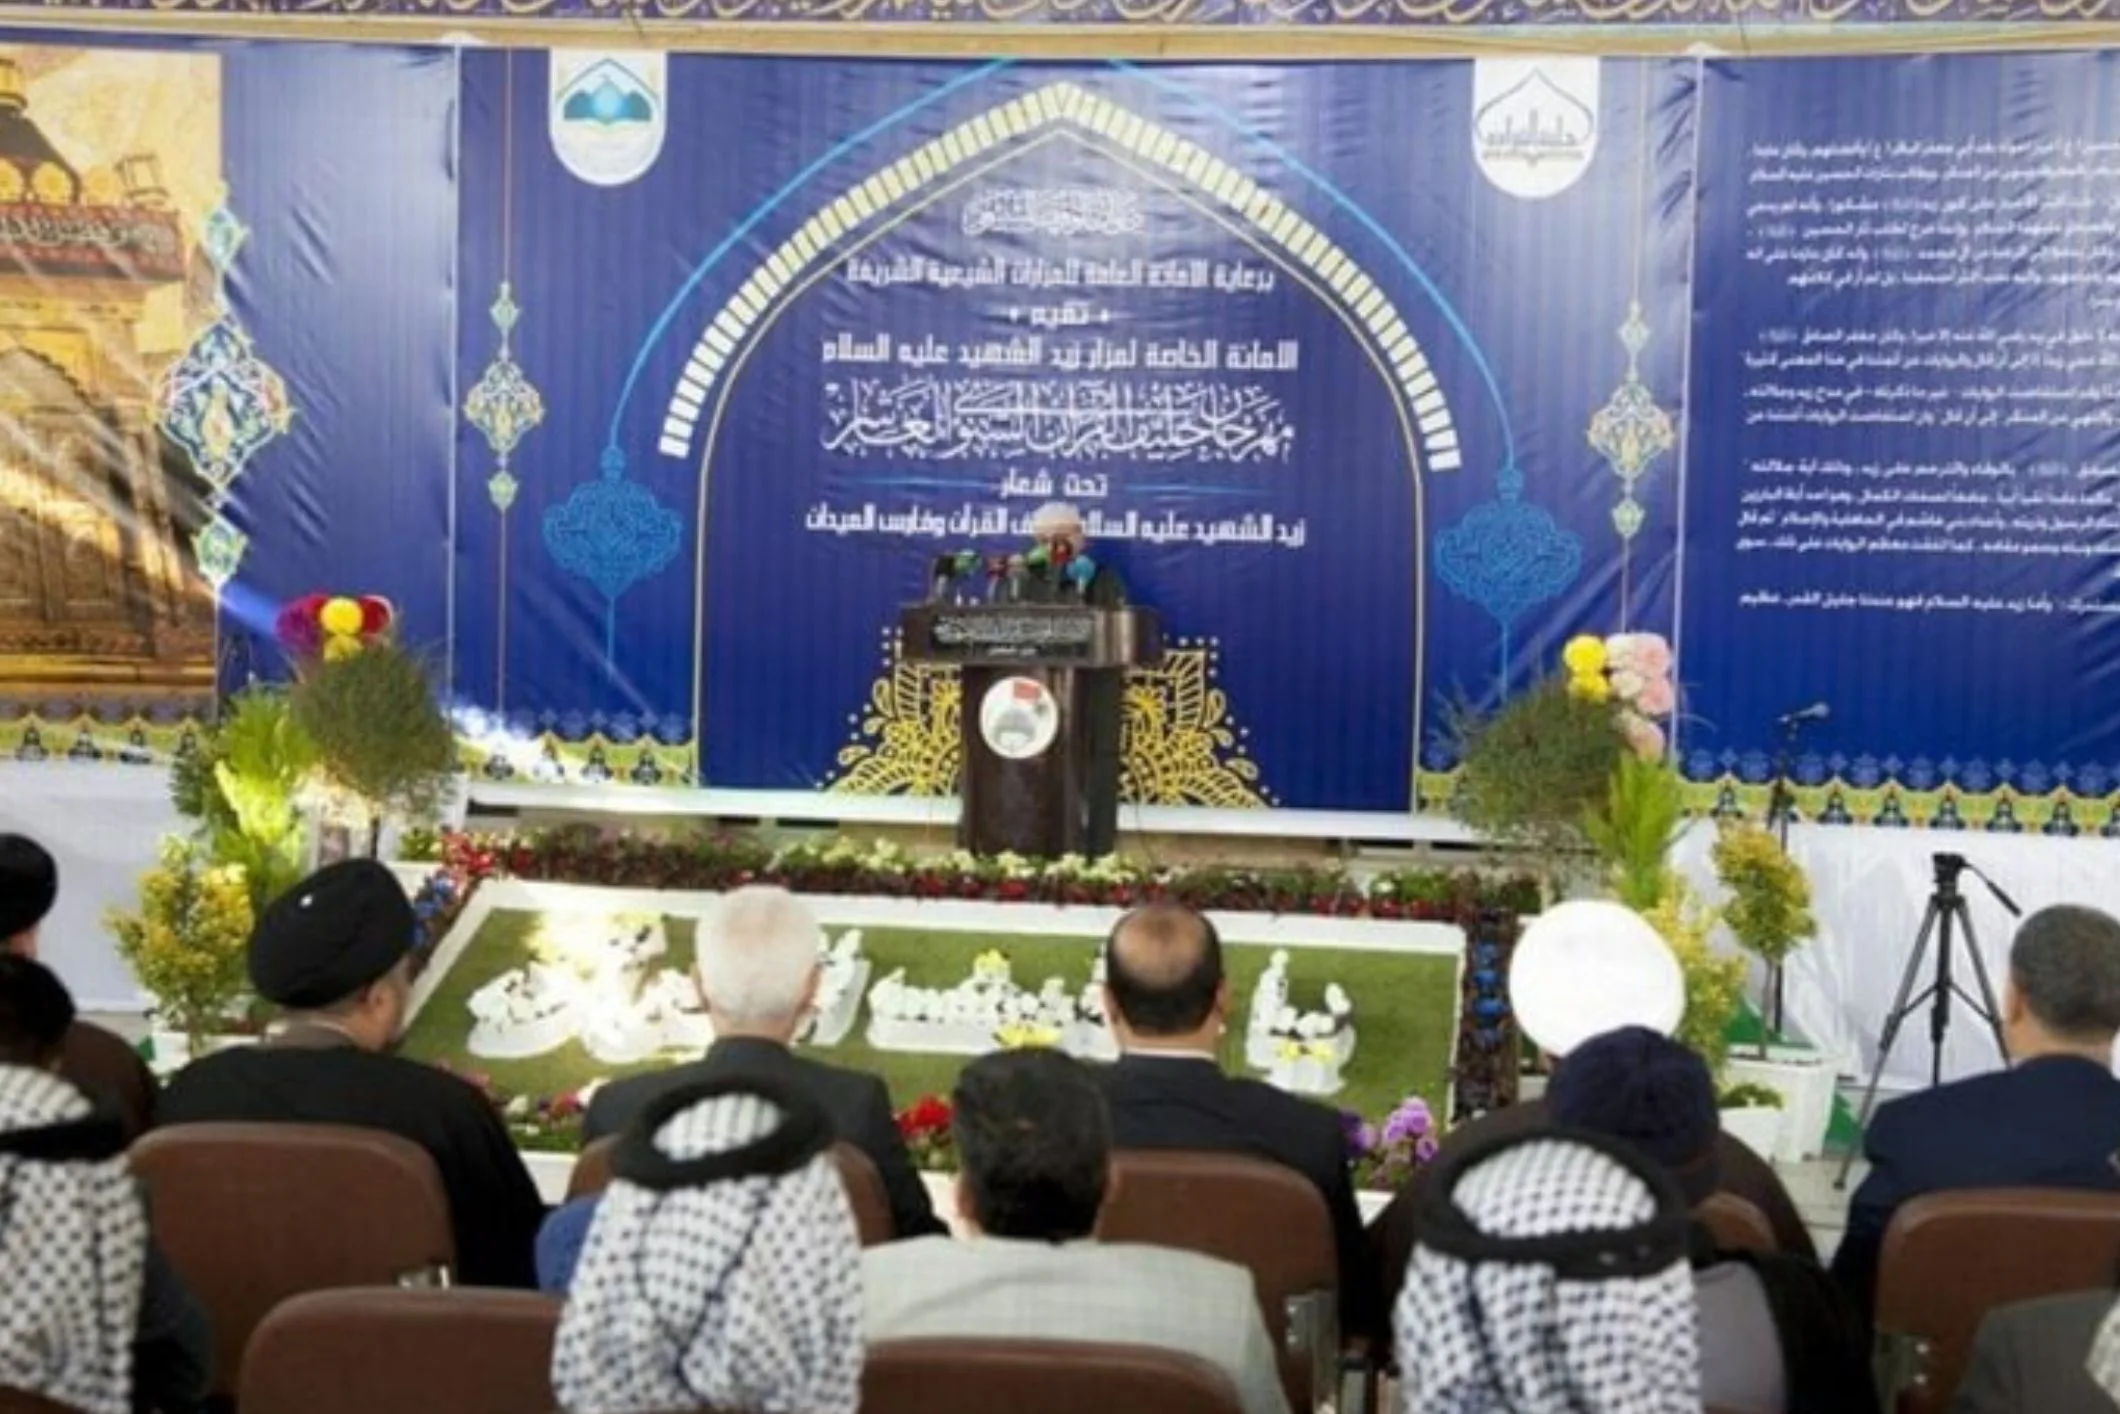 Tenth Annual Haleef al-Quran Festival illuminates Zaid The Martyr's Biography